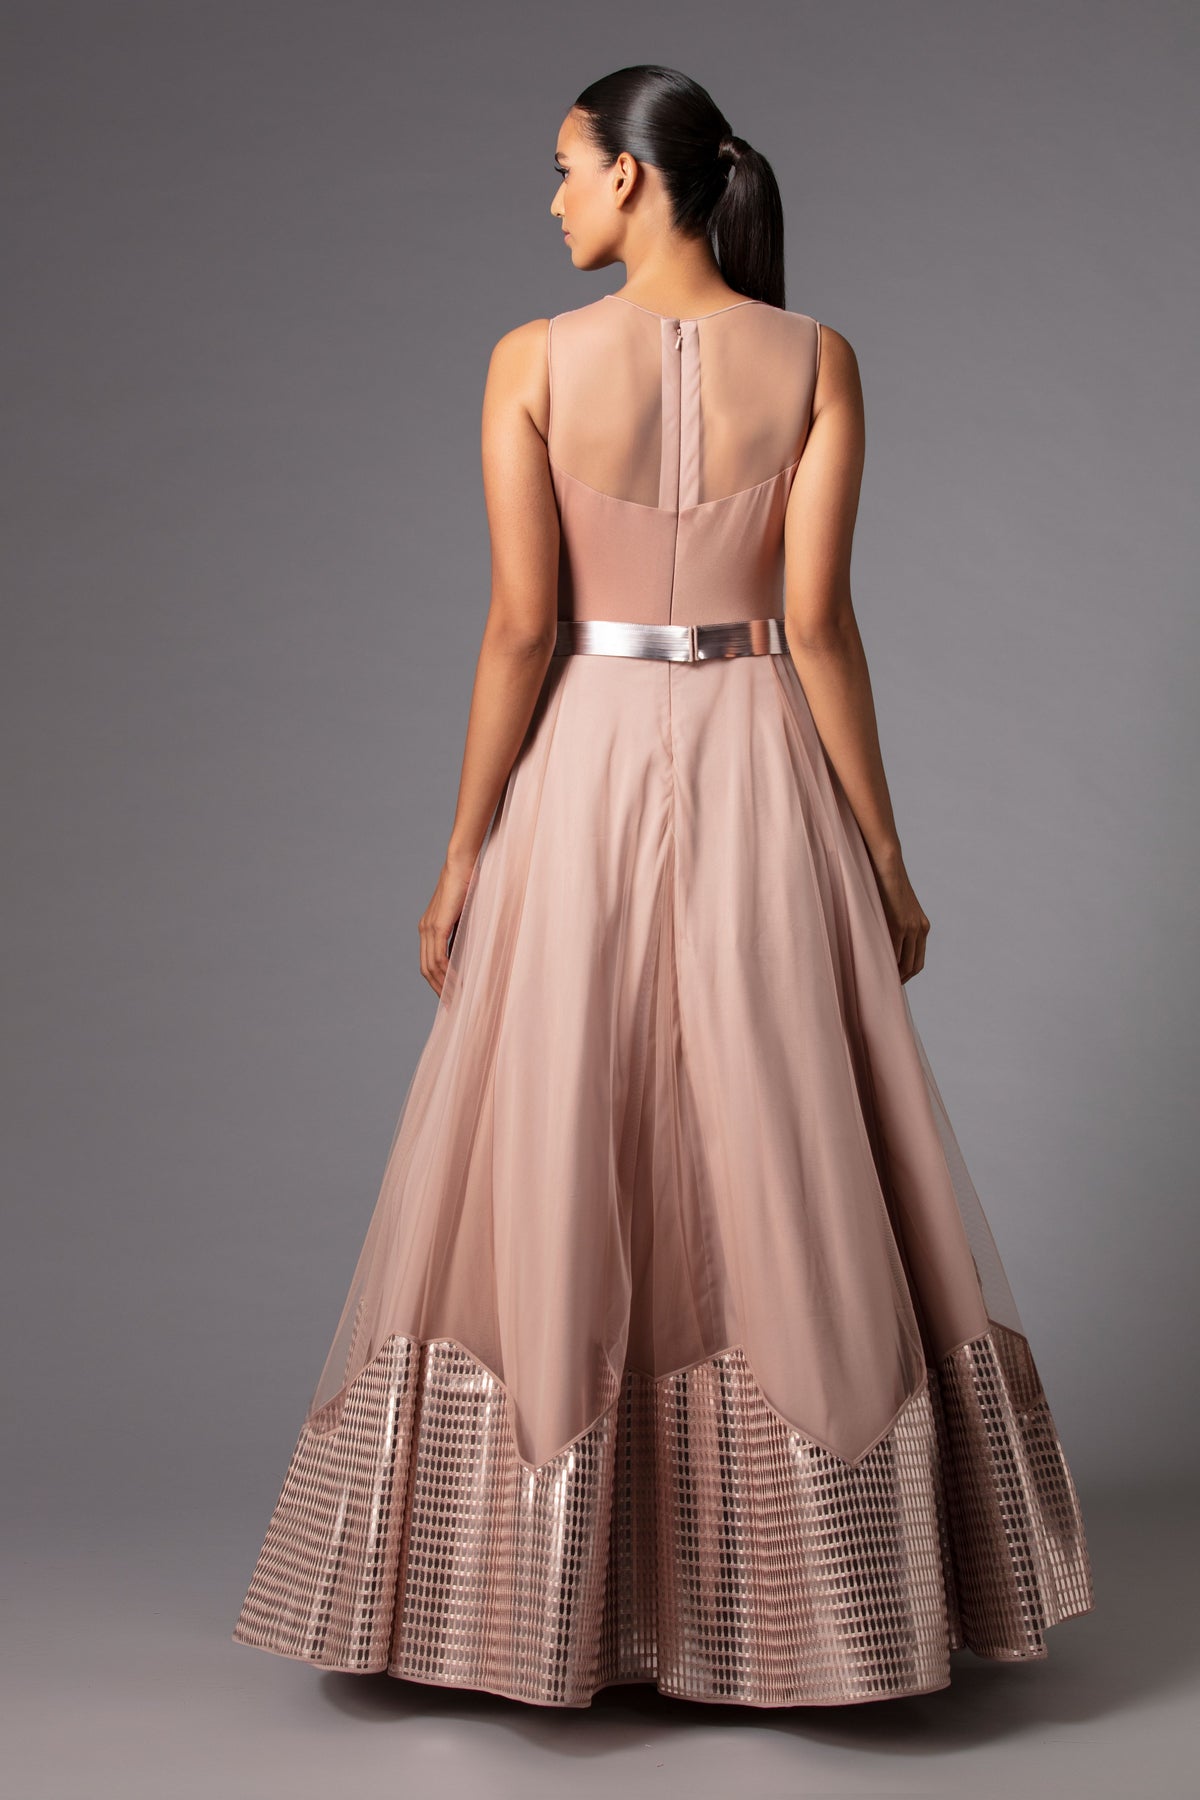 Metallic structured gown